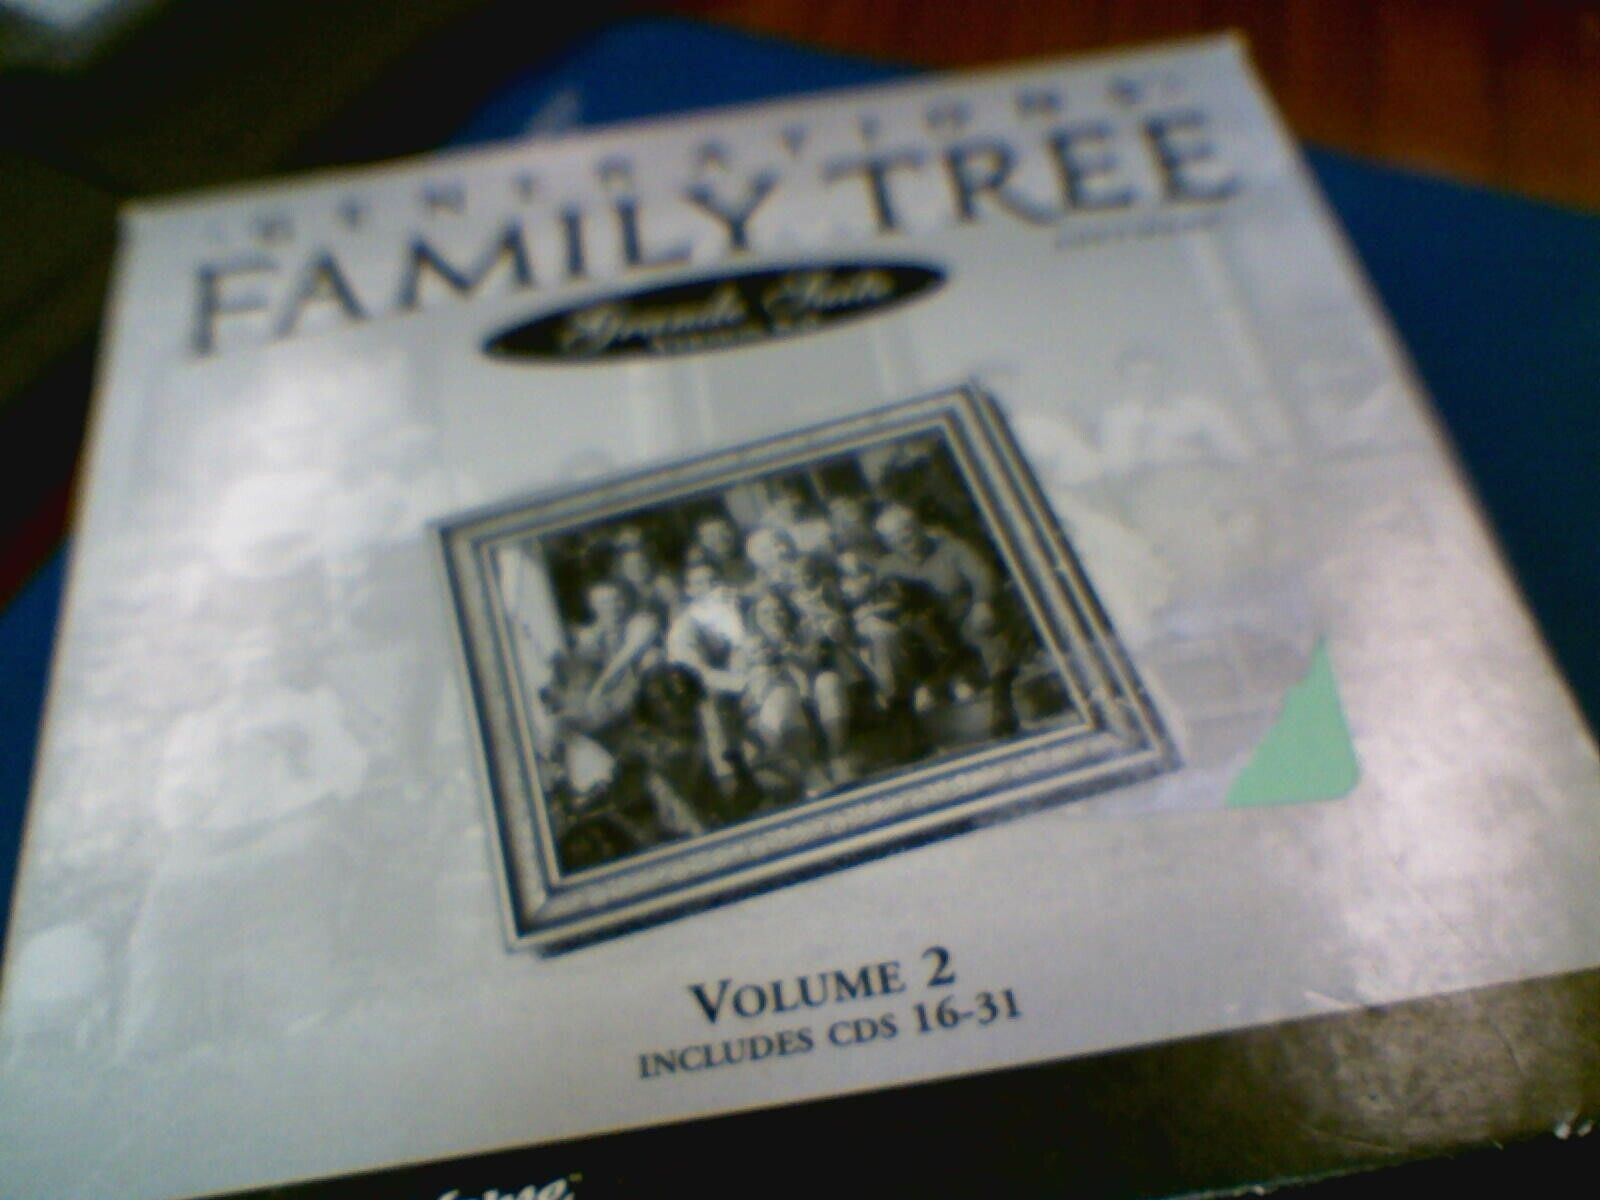 Generations Family Tree Grande Suite Volume 2 (16-31)